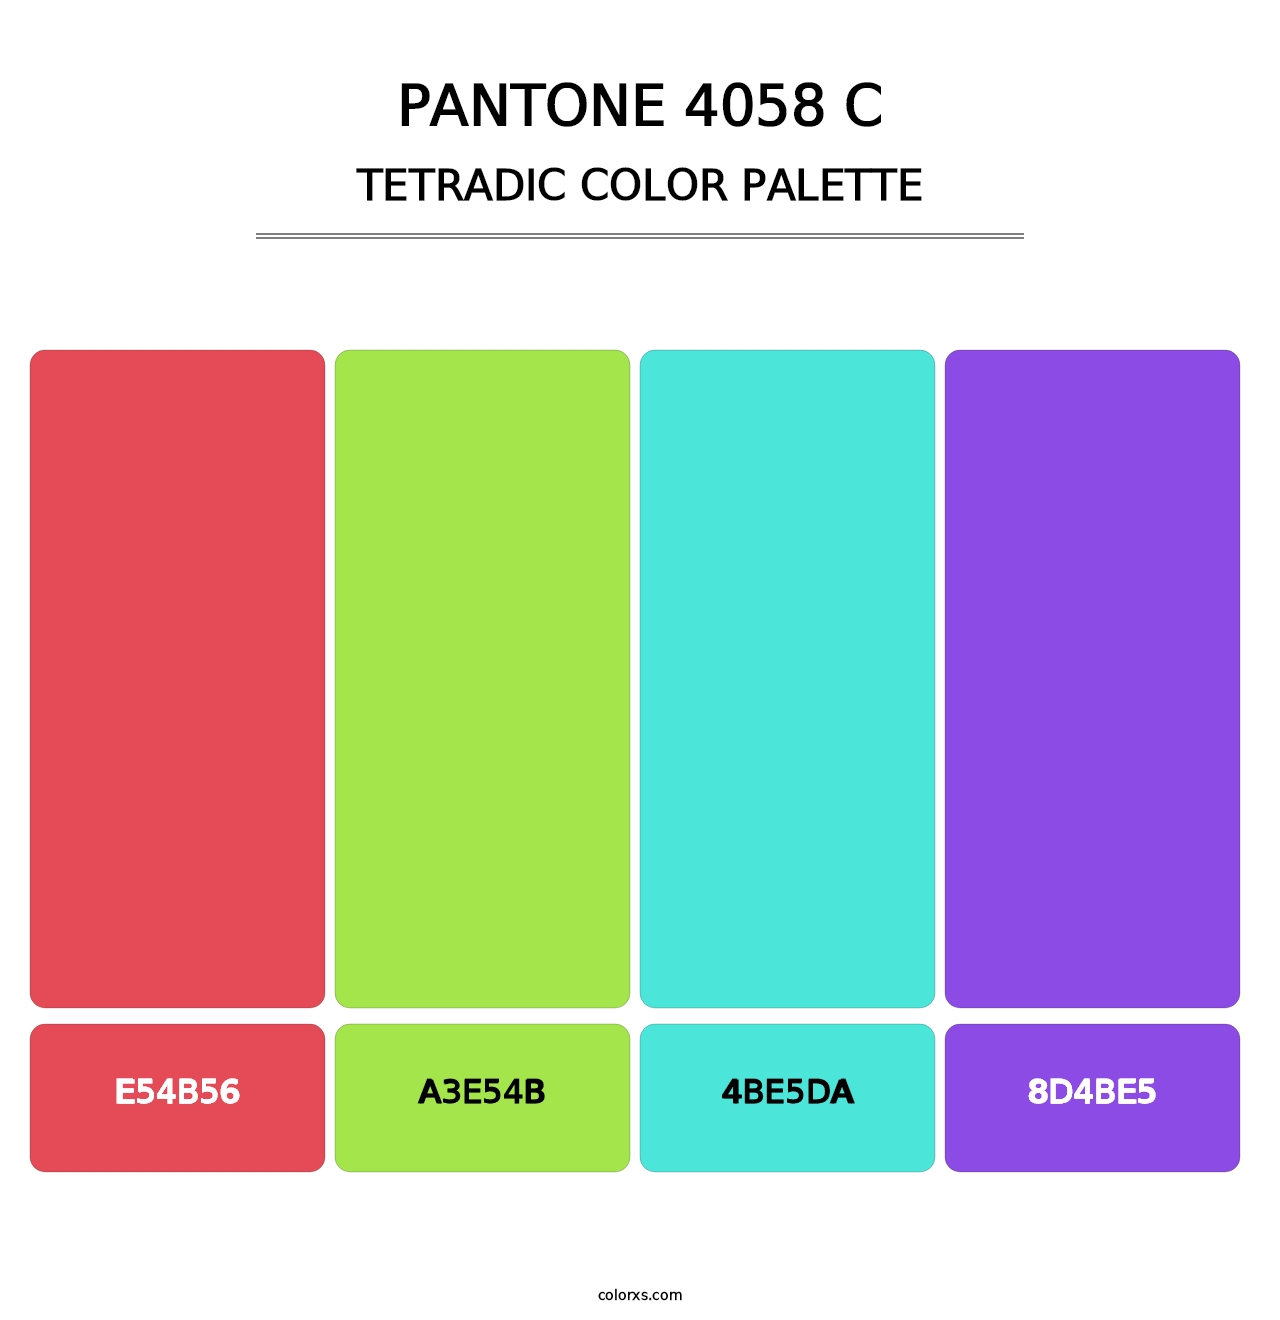 PANTONE 4058 C - Tetradic Color Palette